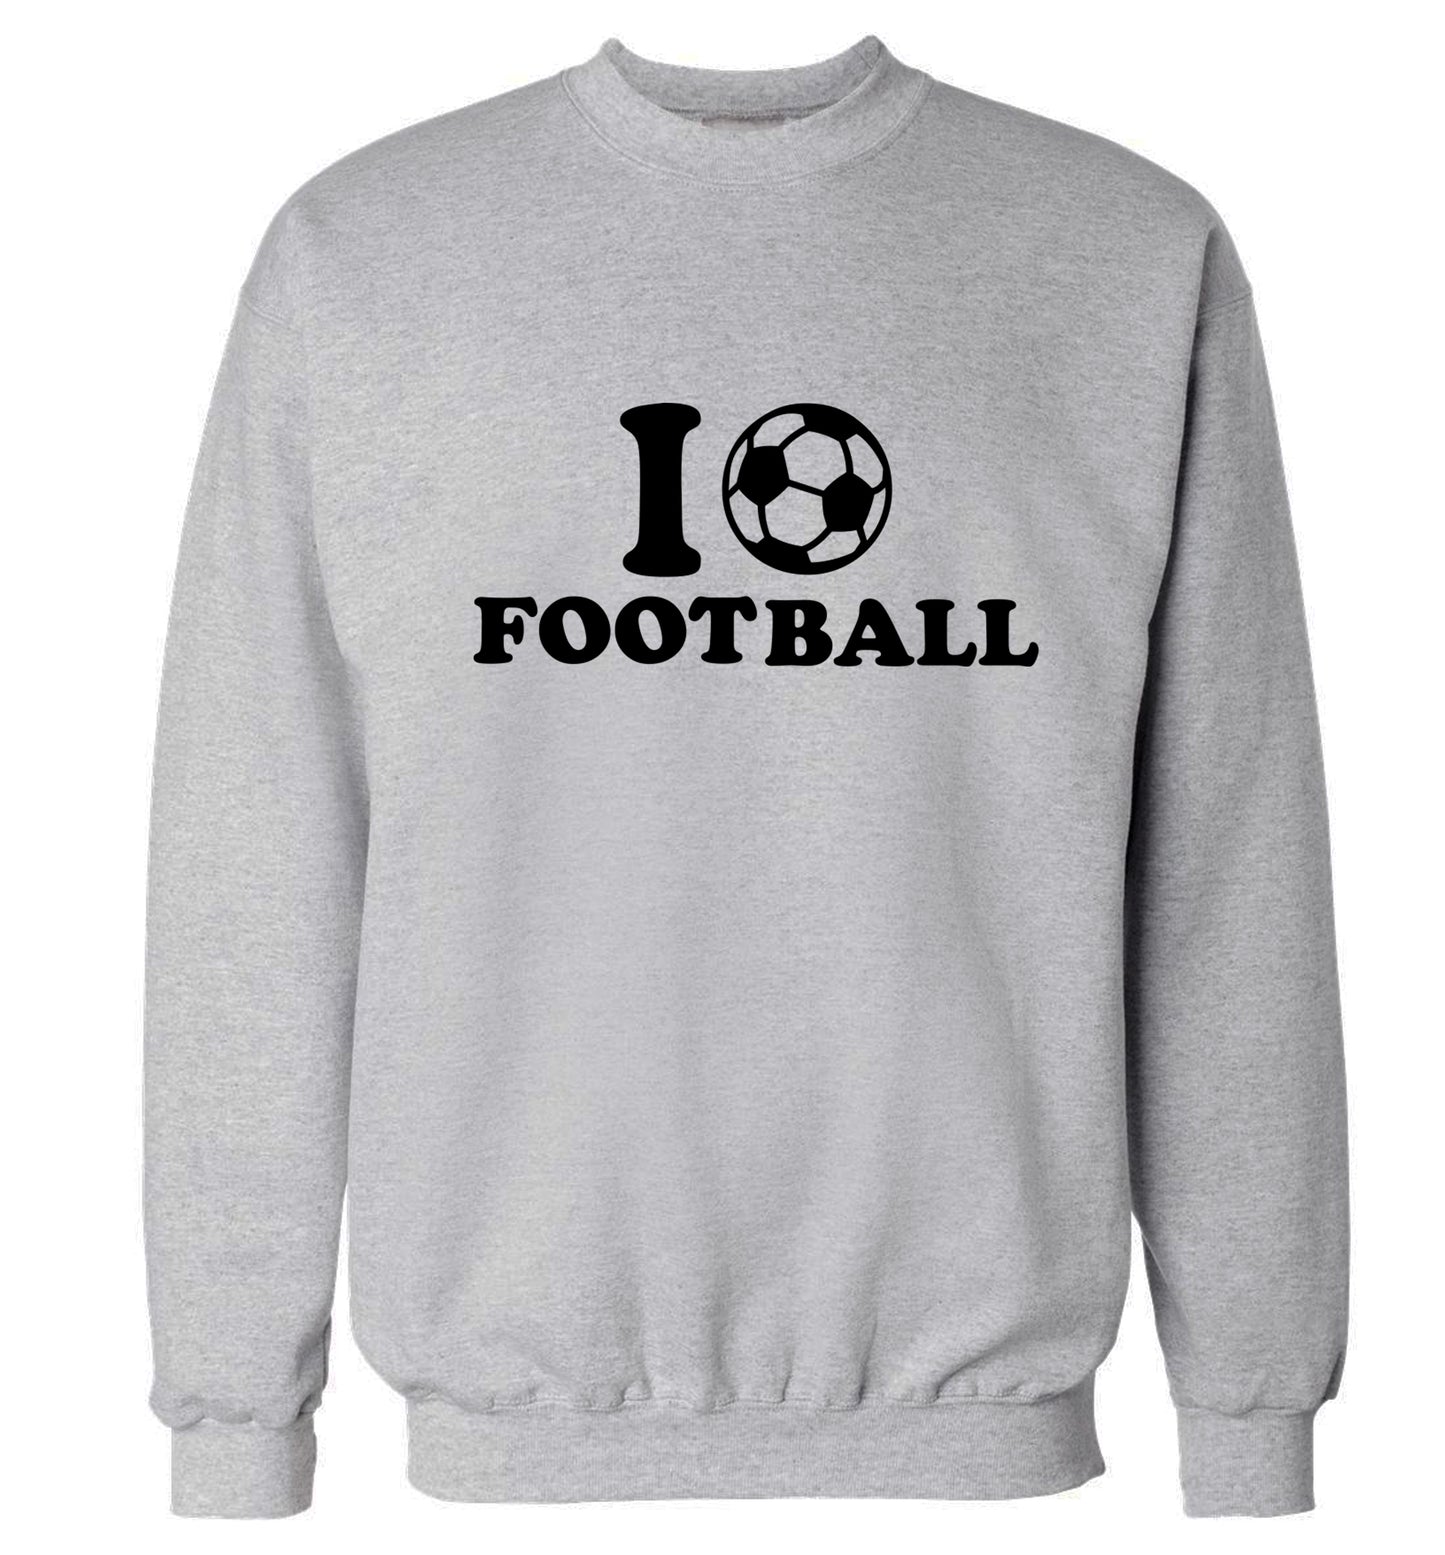 I love football Adult's unisexgrey Sweater 2XL